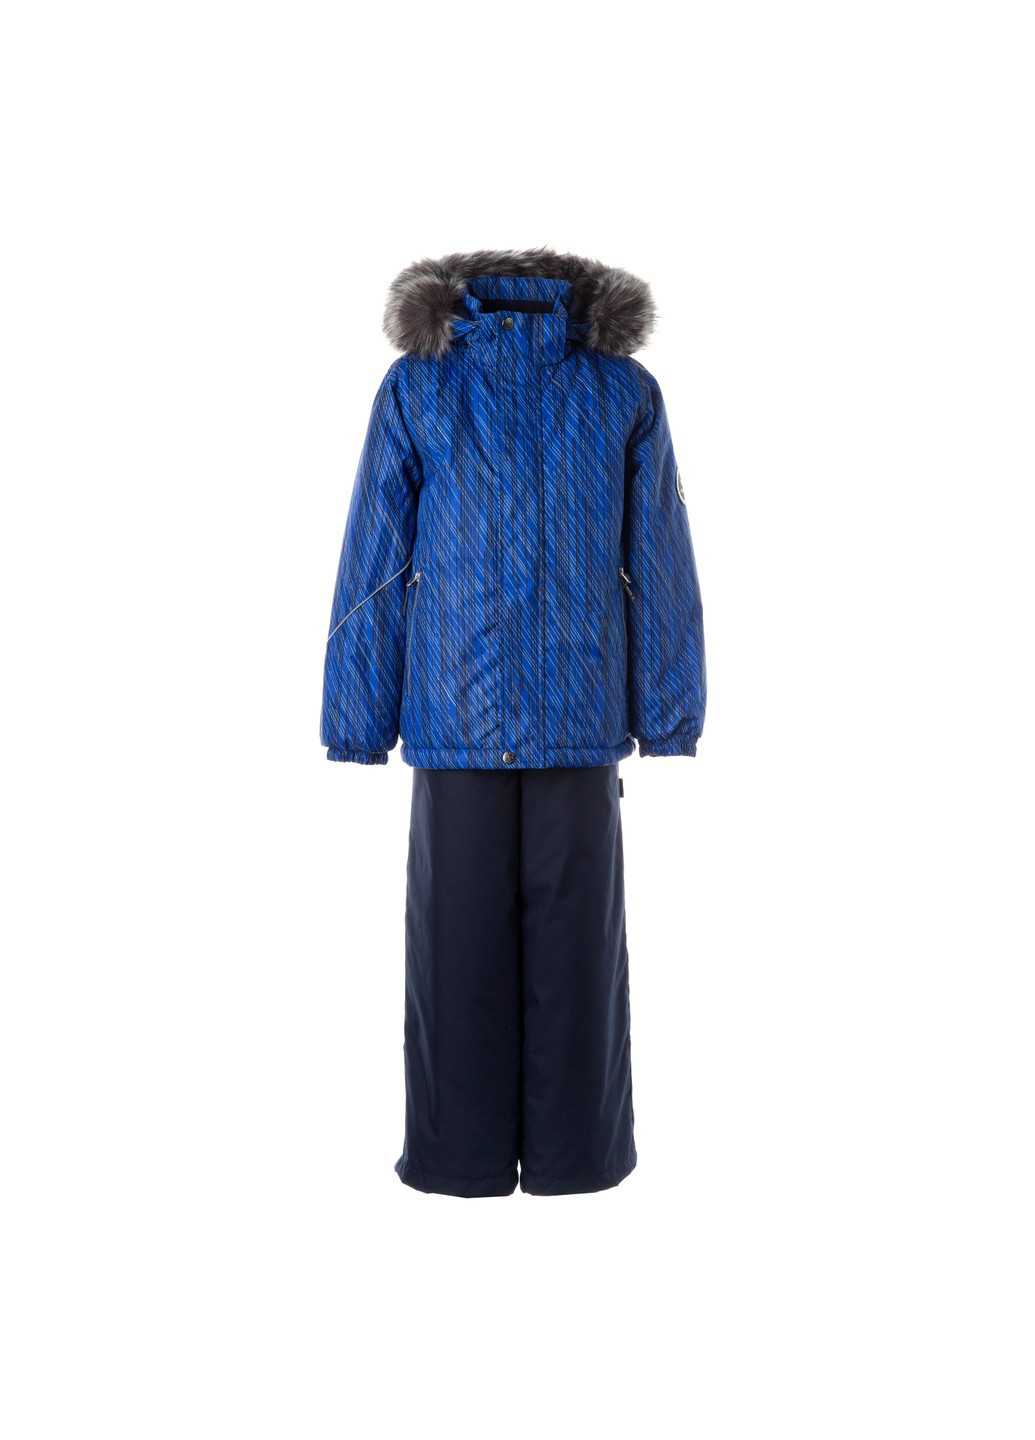 Синий зимний комплект зимний (куртка + полукомбинезон) dante 1 Huppa